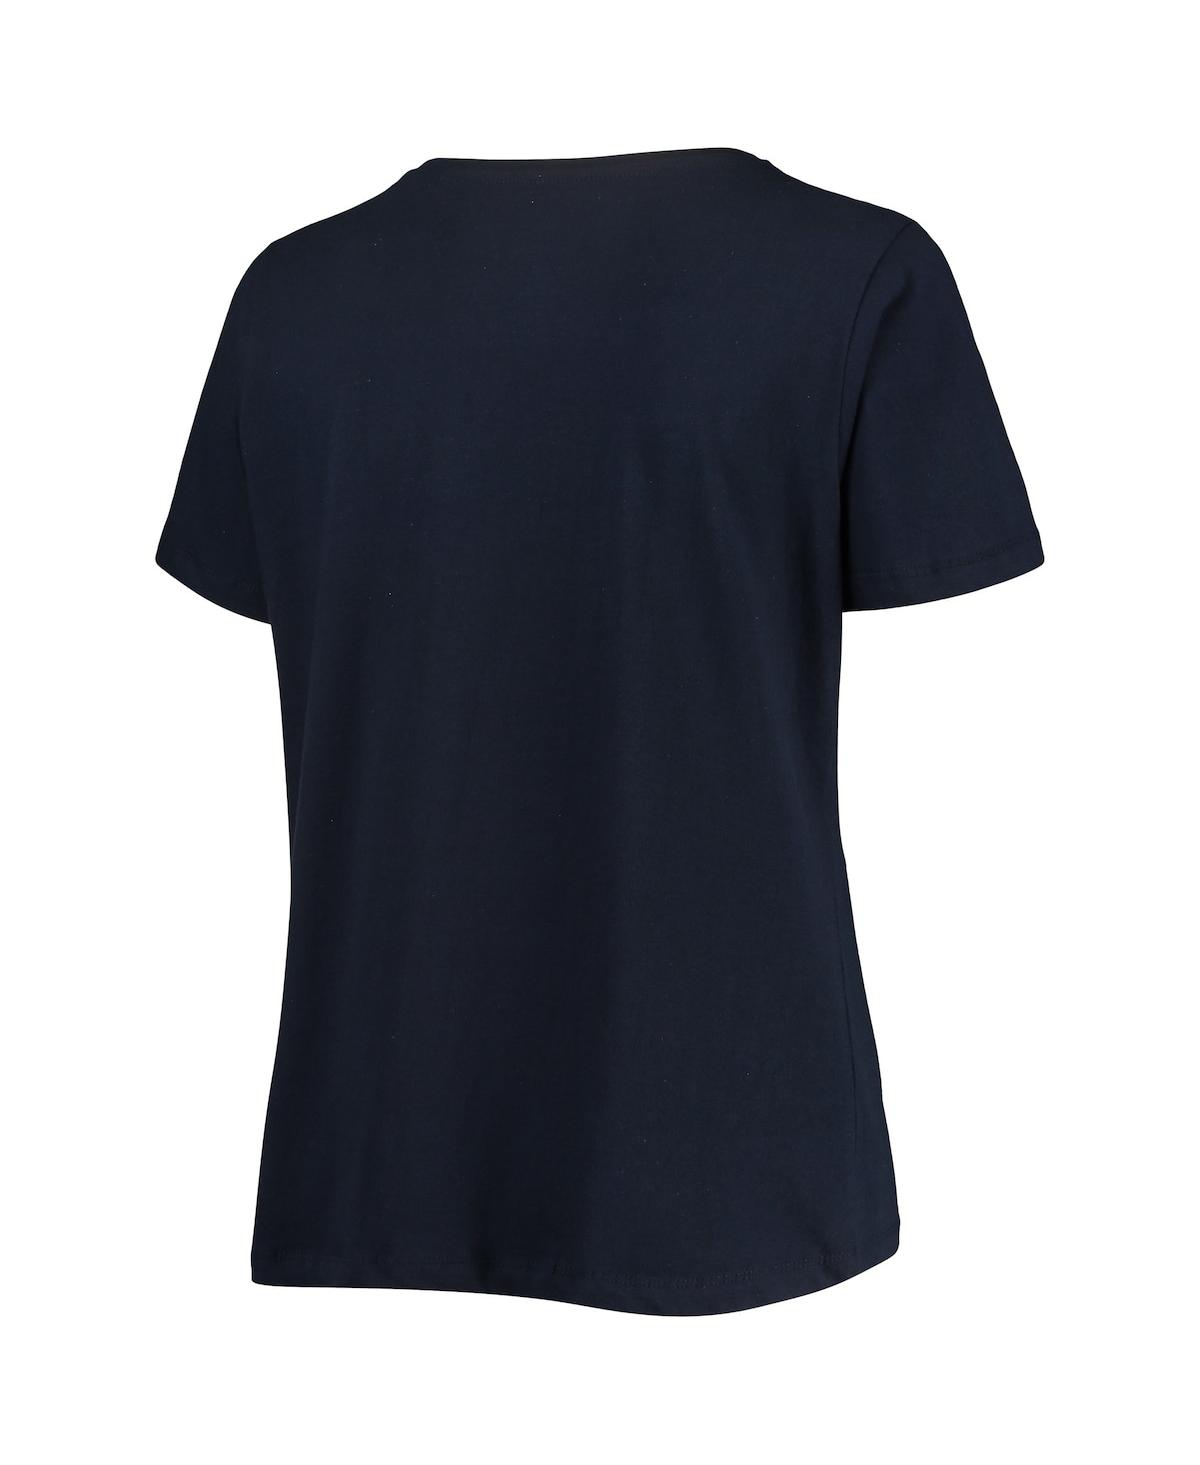 New Era Women's Royal Los Angeles Dodgers Plus Space Dye Raglan V-Neck  T-shirt